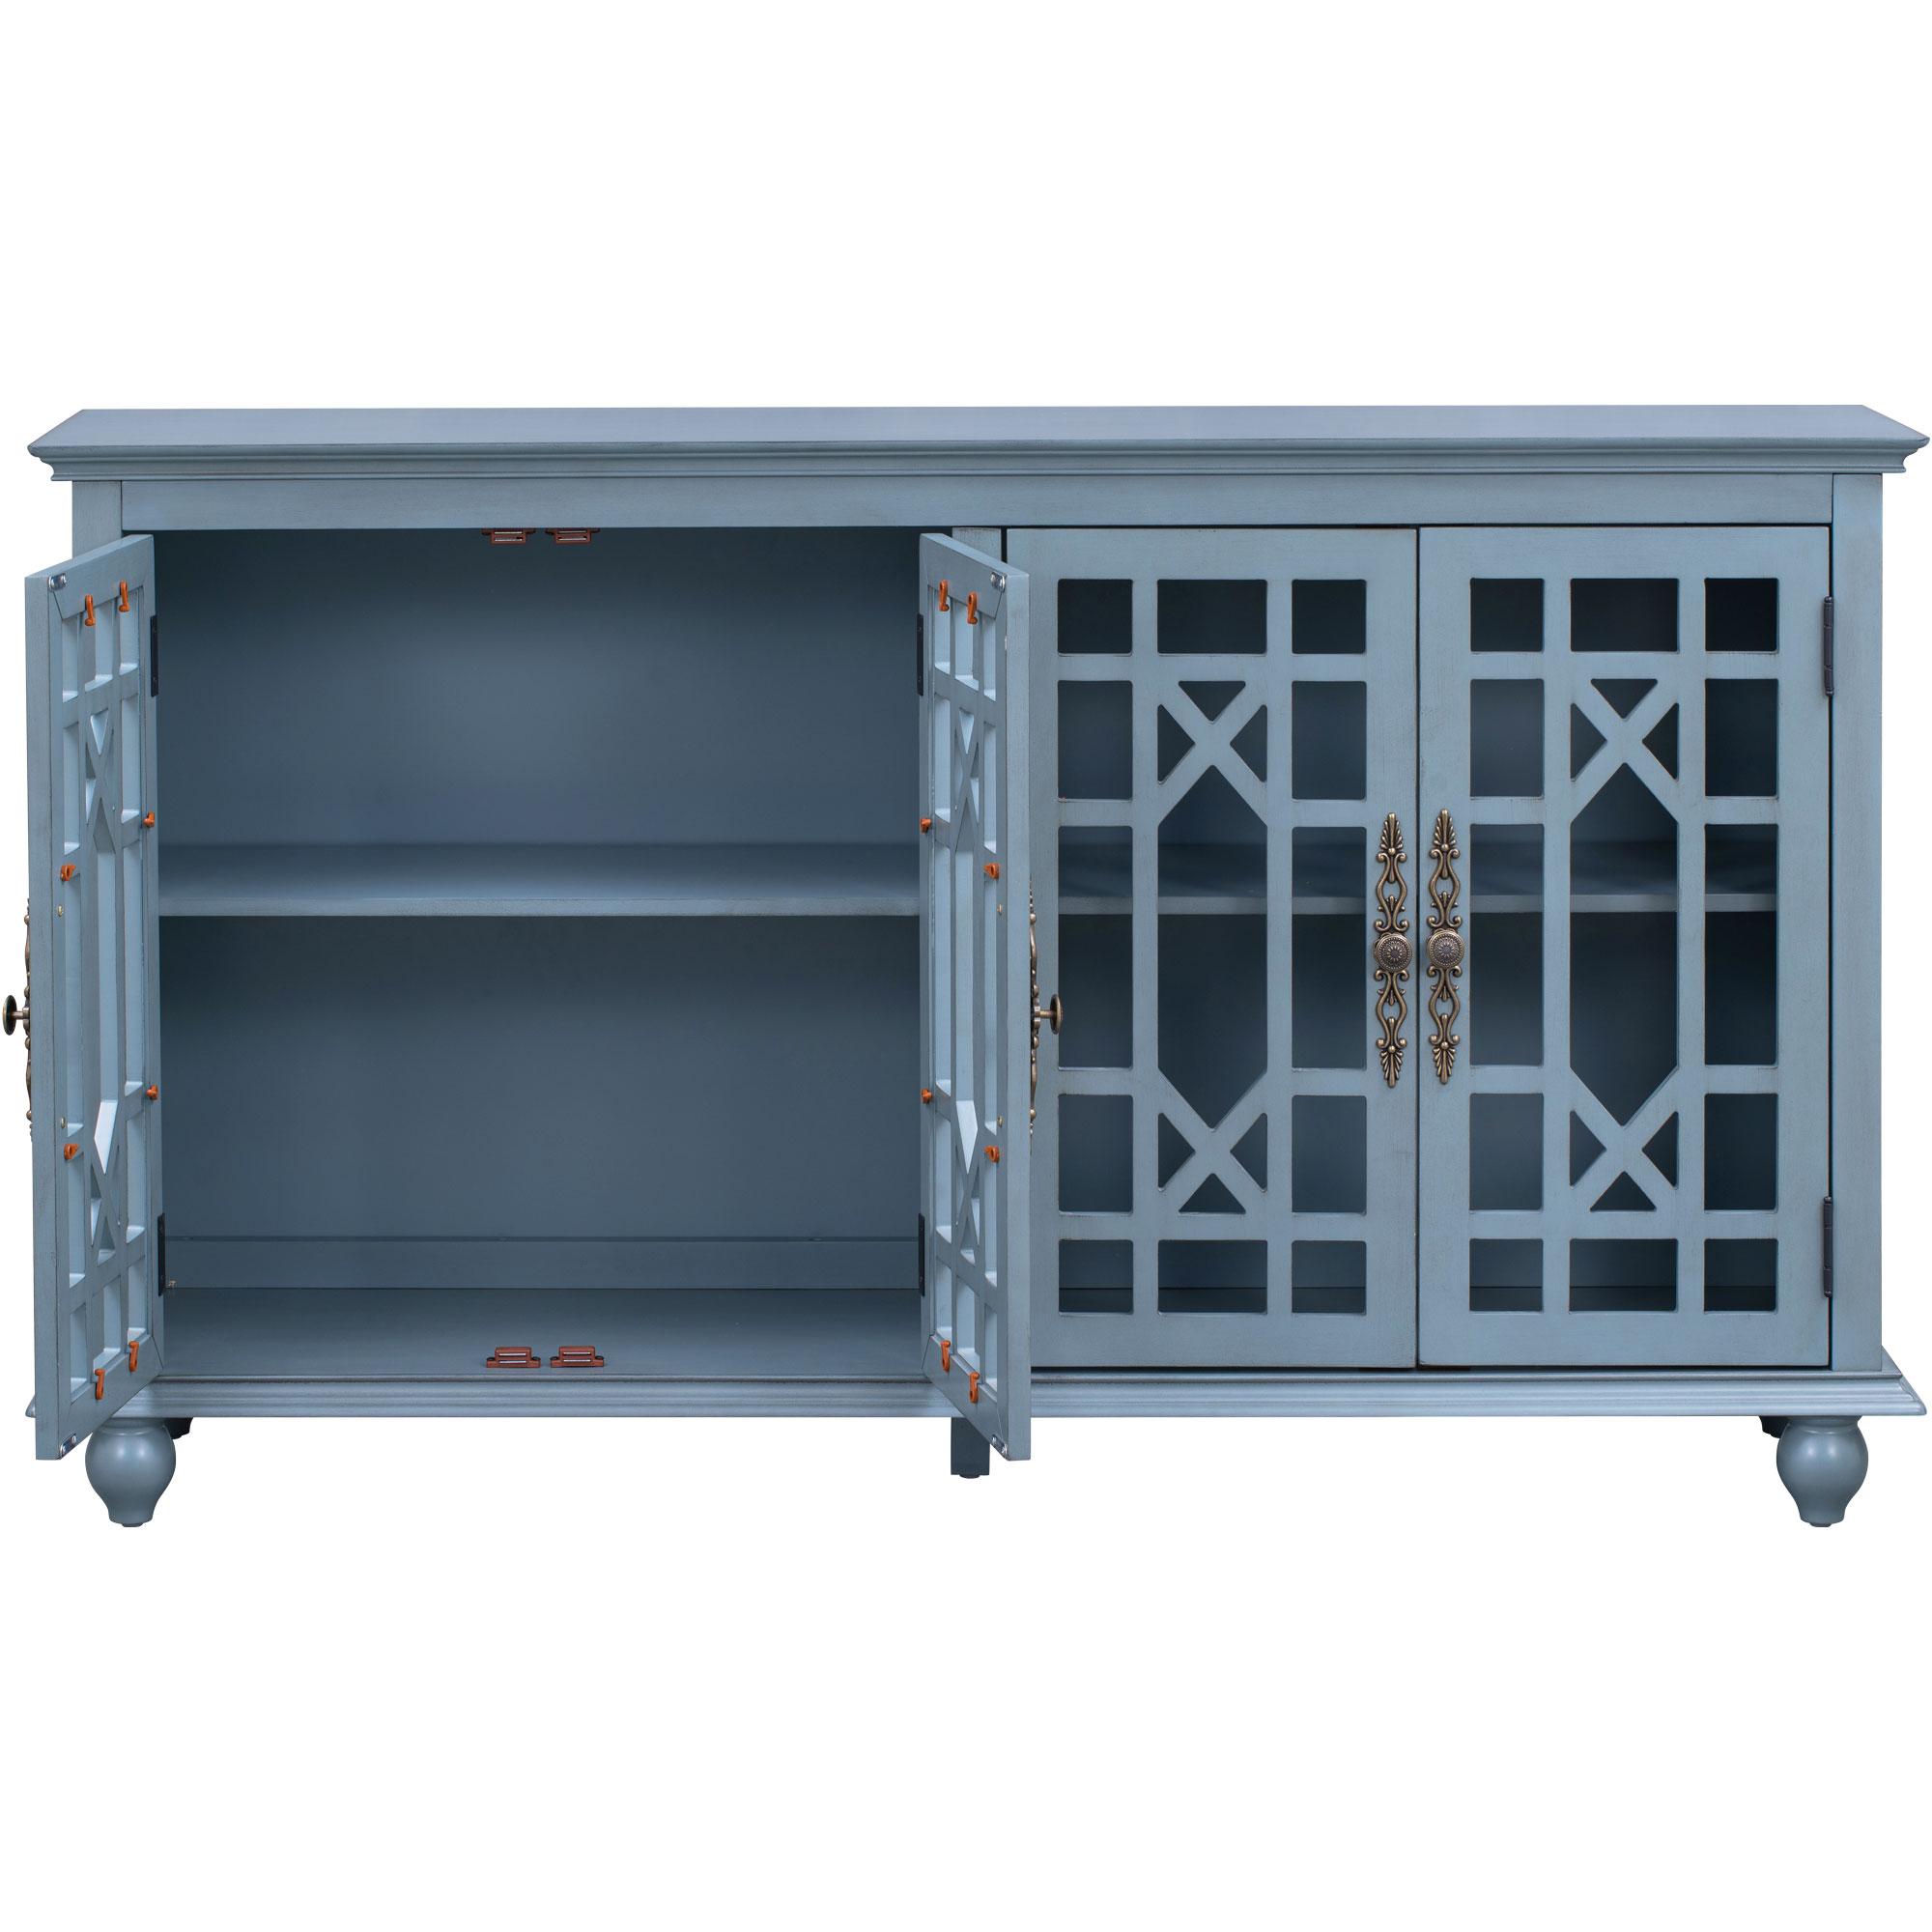 Wood Sideboard With Adjustable Height Shelves, Metal Handles, And 4 Doors - WF298770AAM